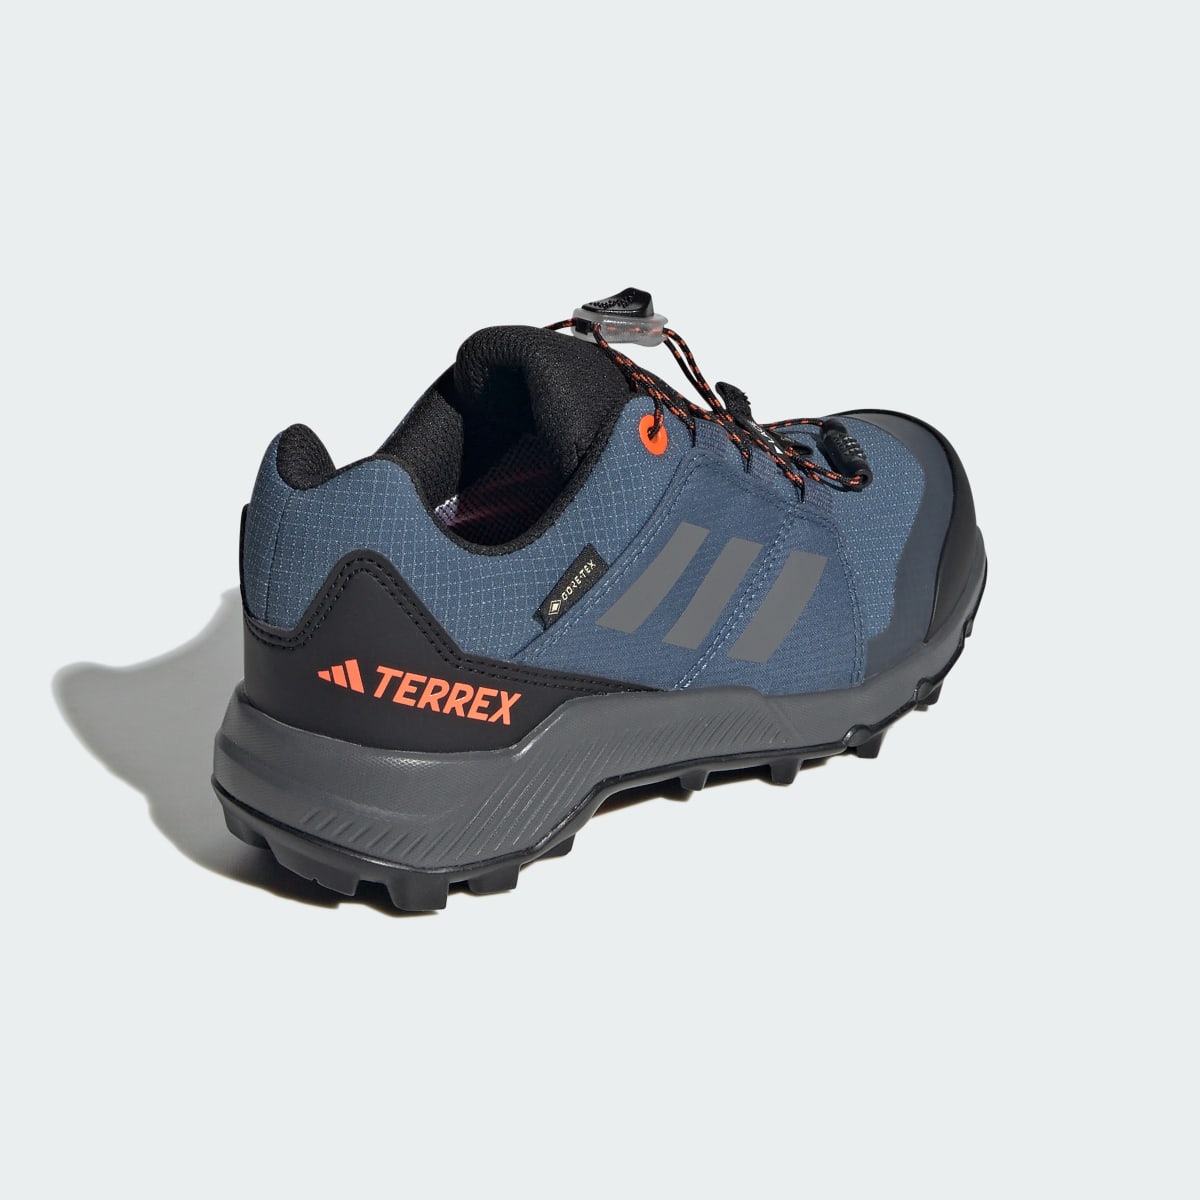 Adidas Terrex GORE-TEX Hiking Shoes. 7